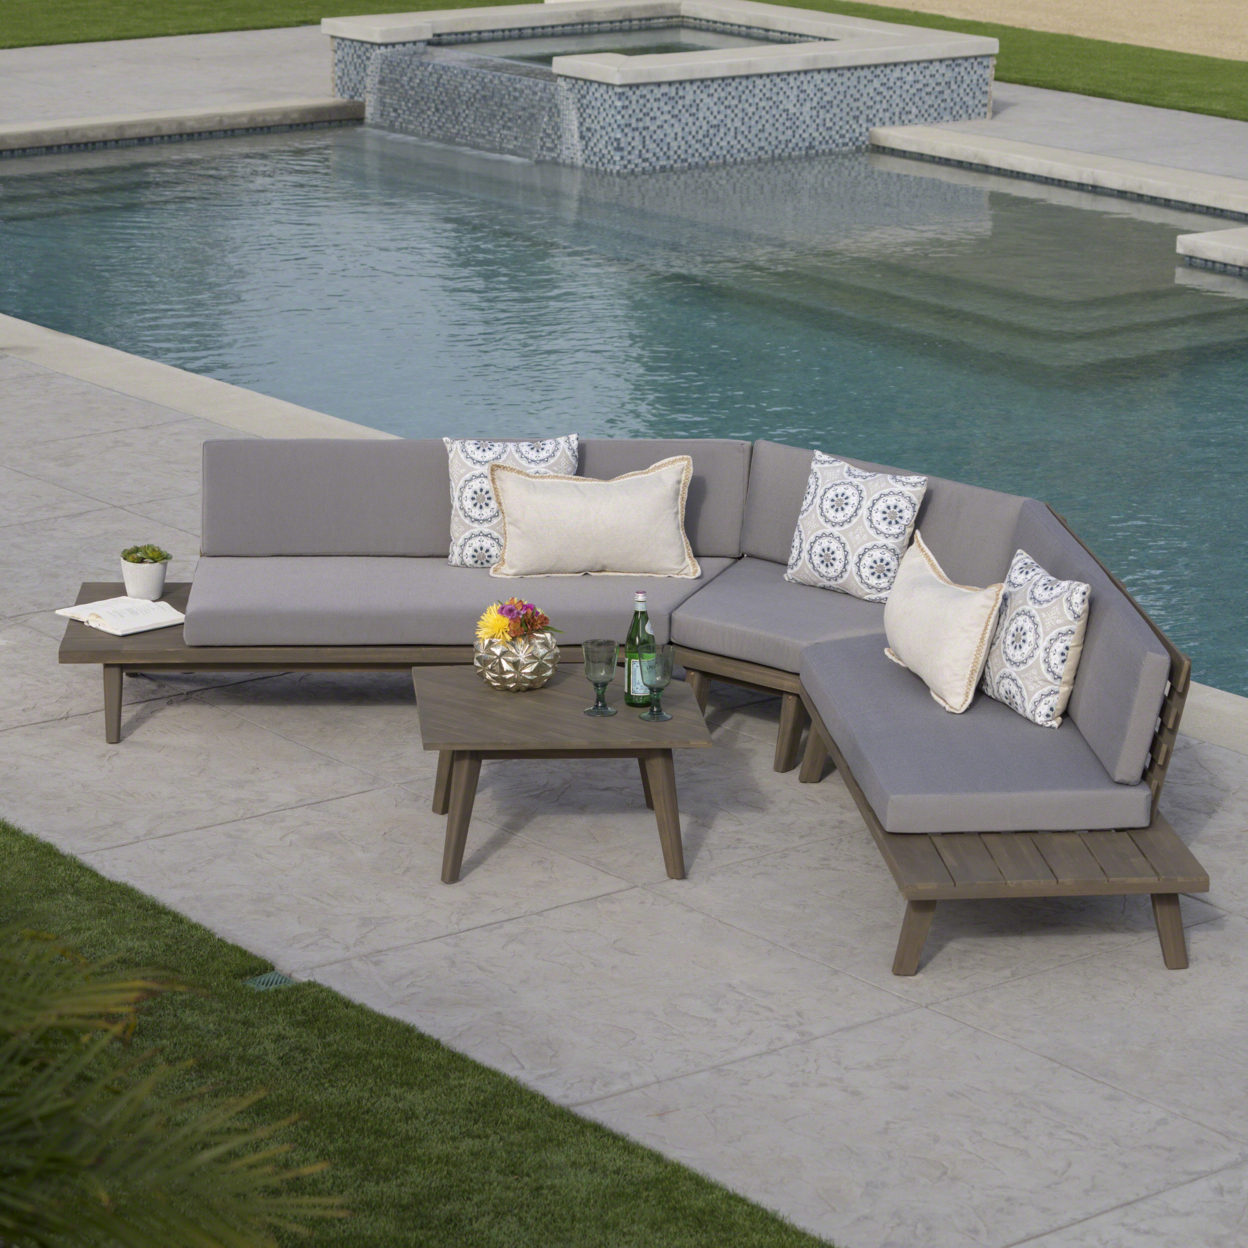 Hillside Outdoor V Shaped 4 Piece Acacia Wood Sectional Sofa Set - Gray